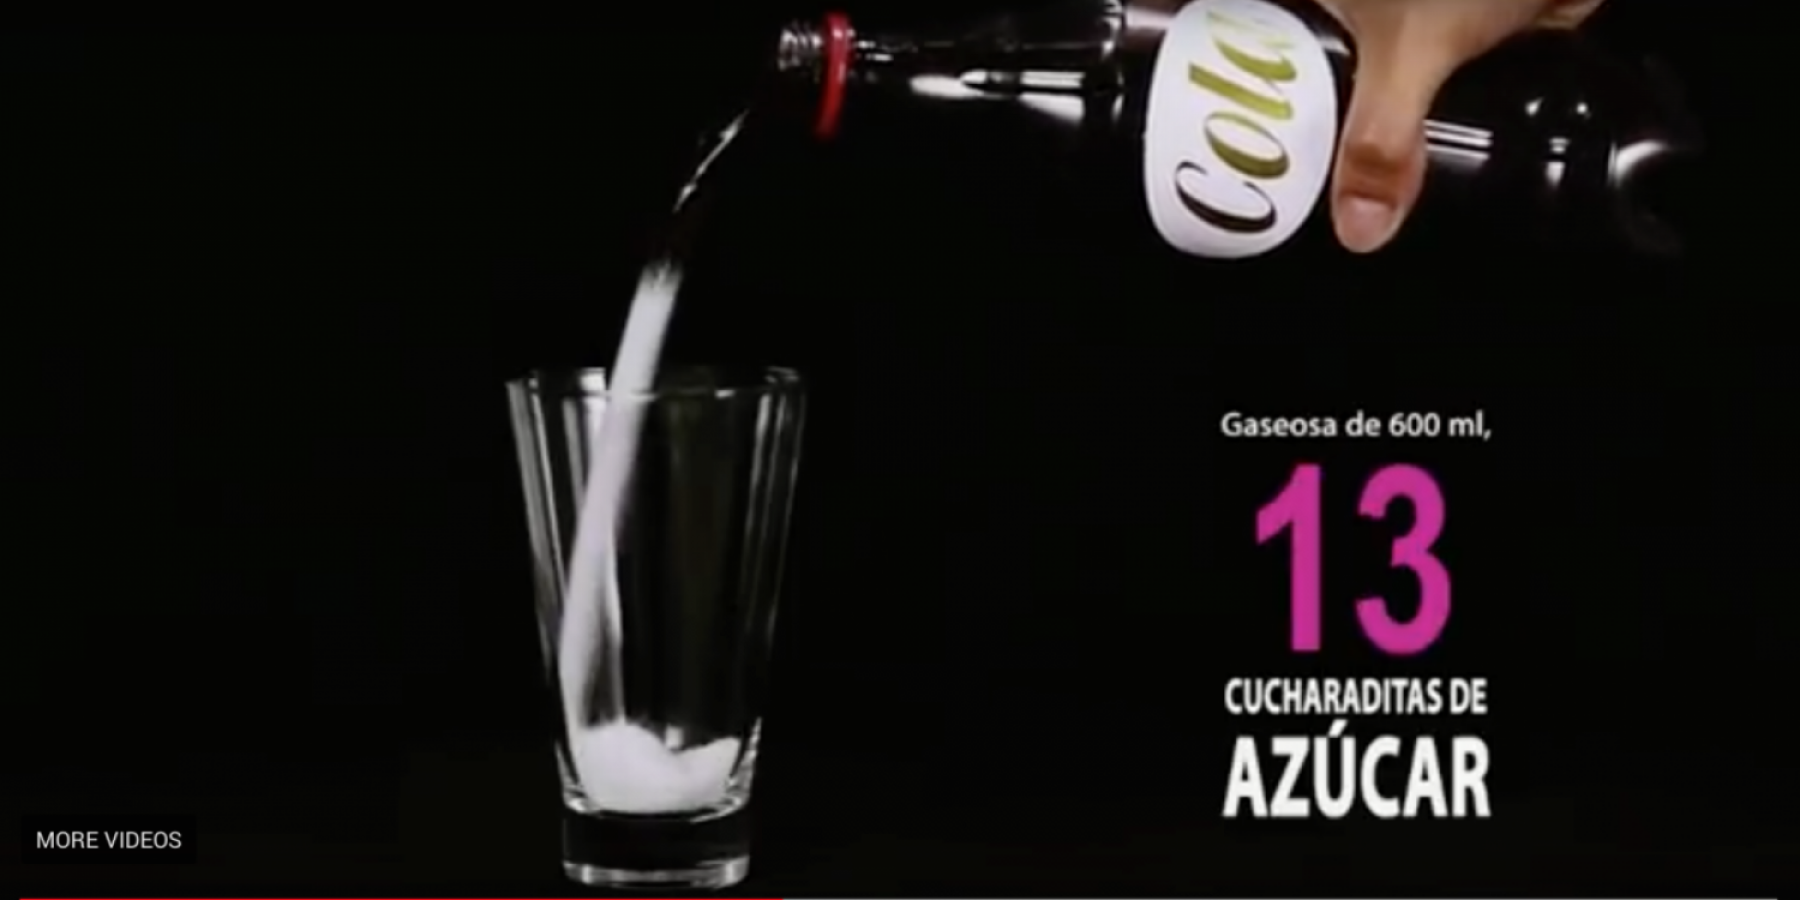 "Tómala en serio" campaign highlights the amount of sugar consumed through drinking sugar-sweetened beverages.